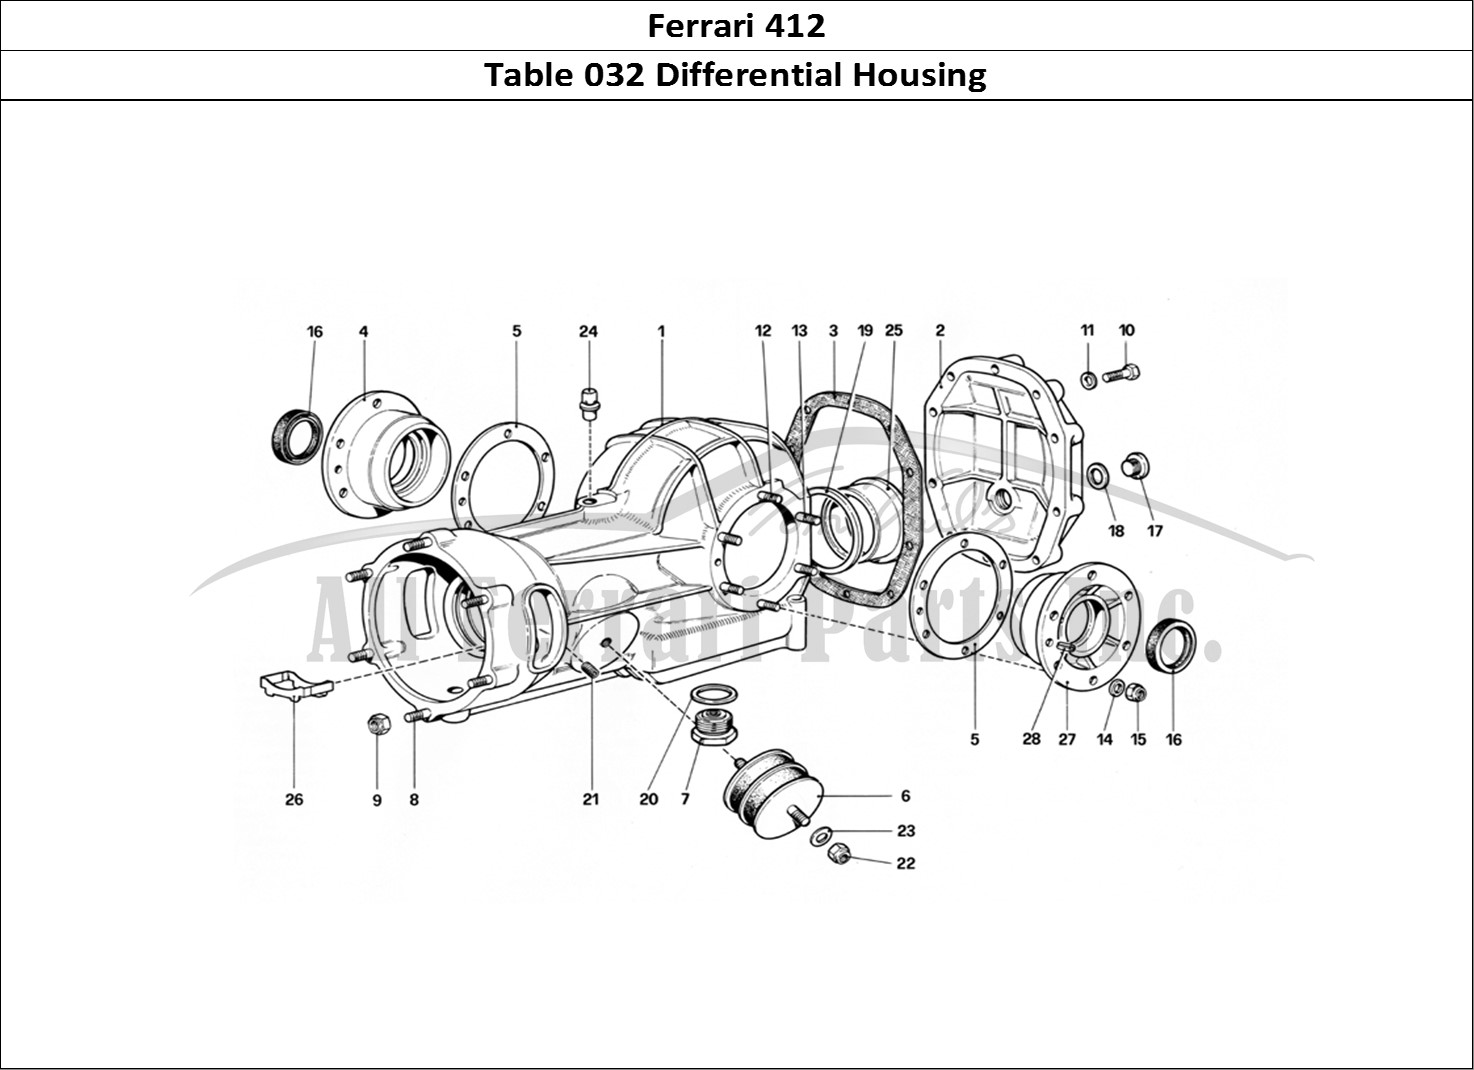 Ferrari Parts Ferrari 412 (Mechanical) Page 032 Differential Housing